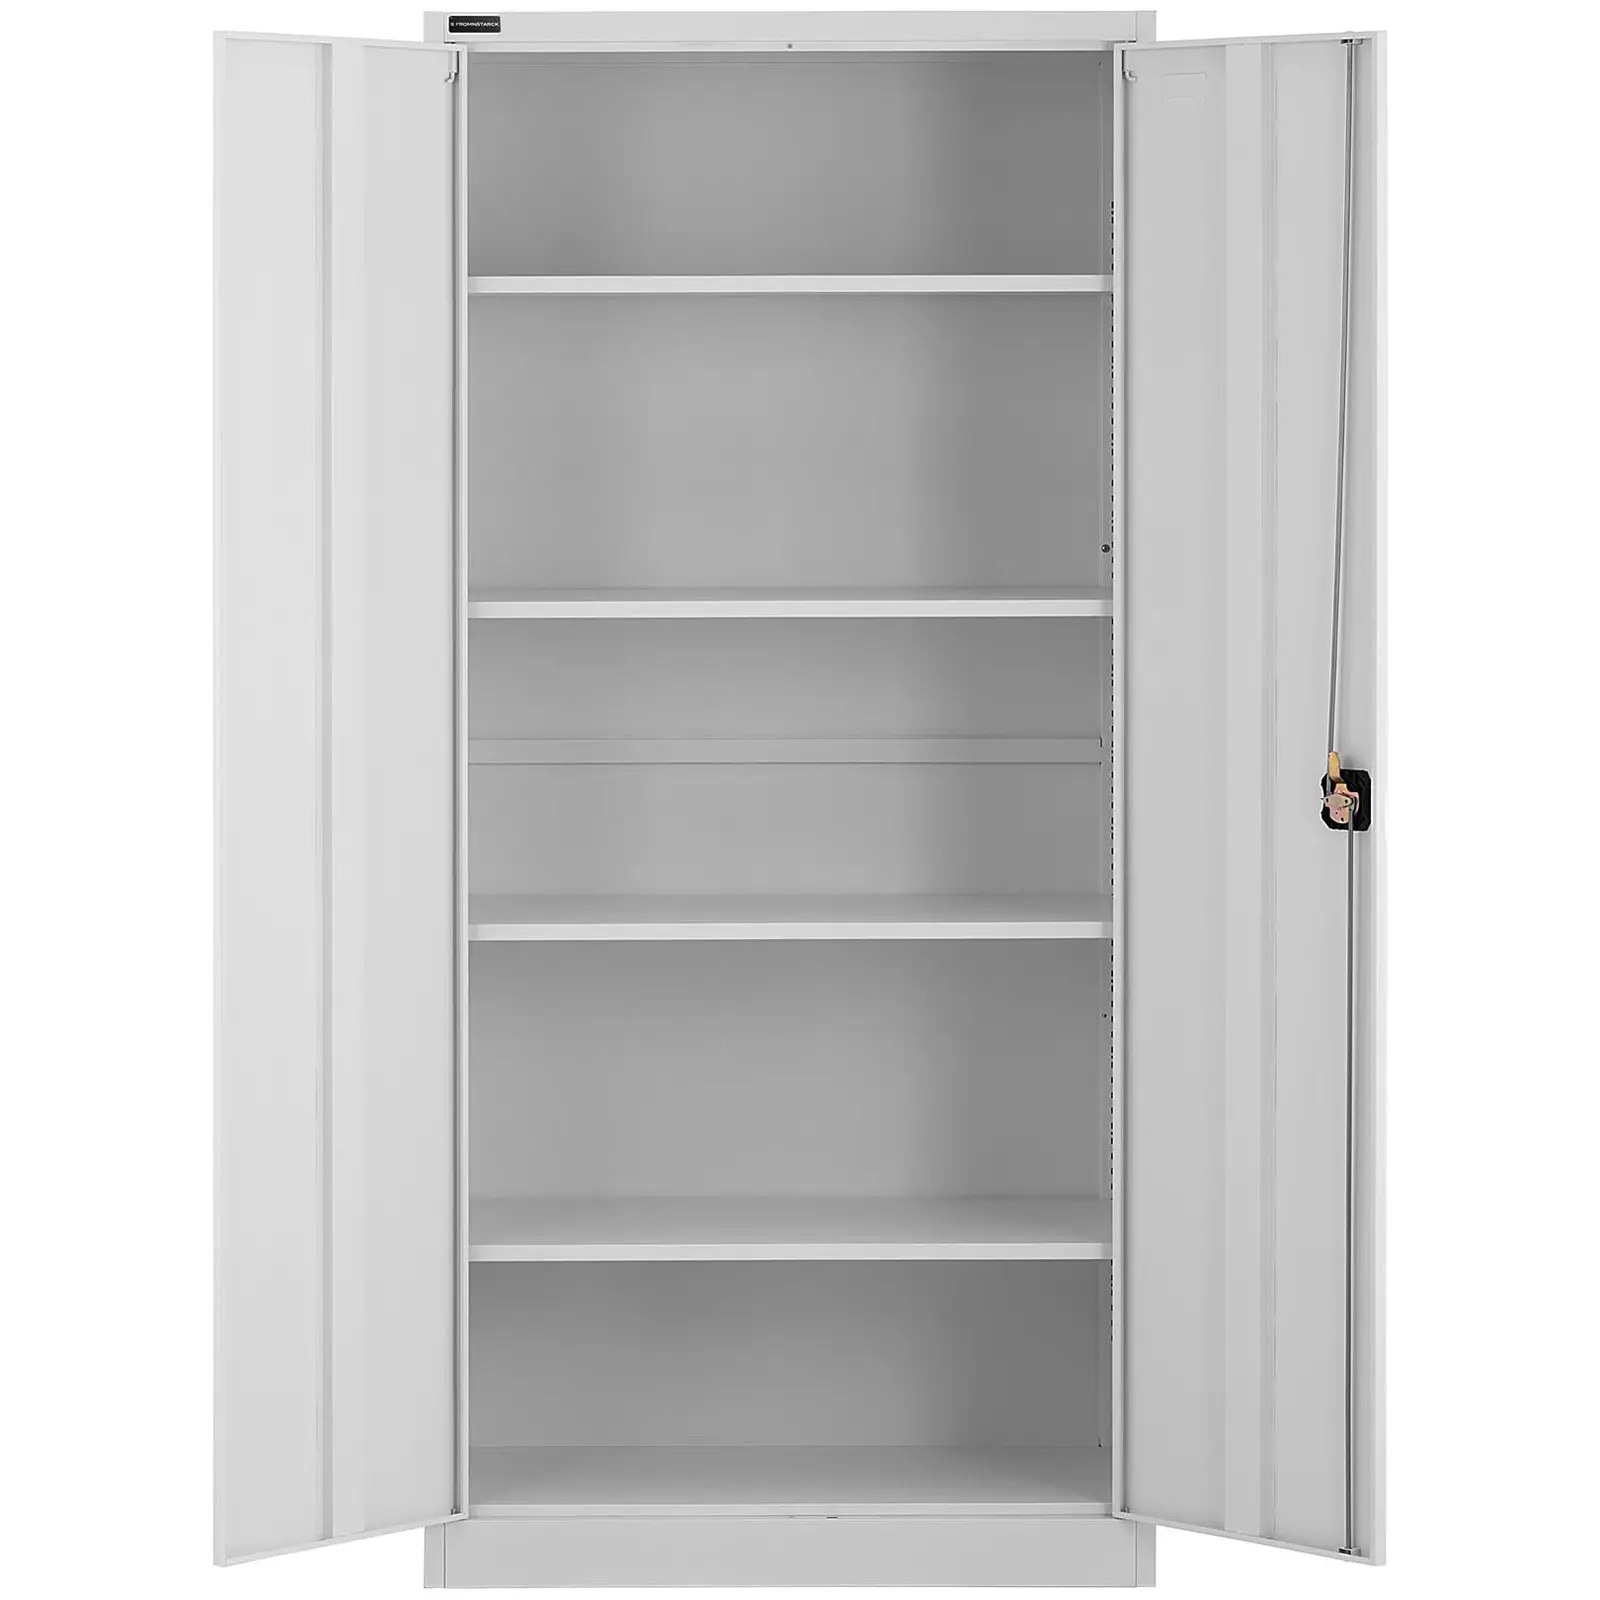 Metal Cabinet - 195 cm - 4 shelves - grey